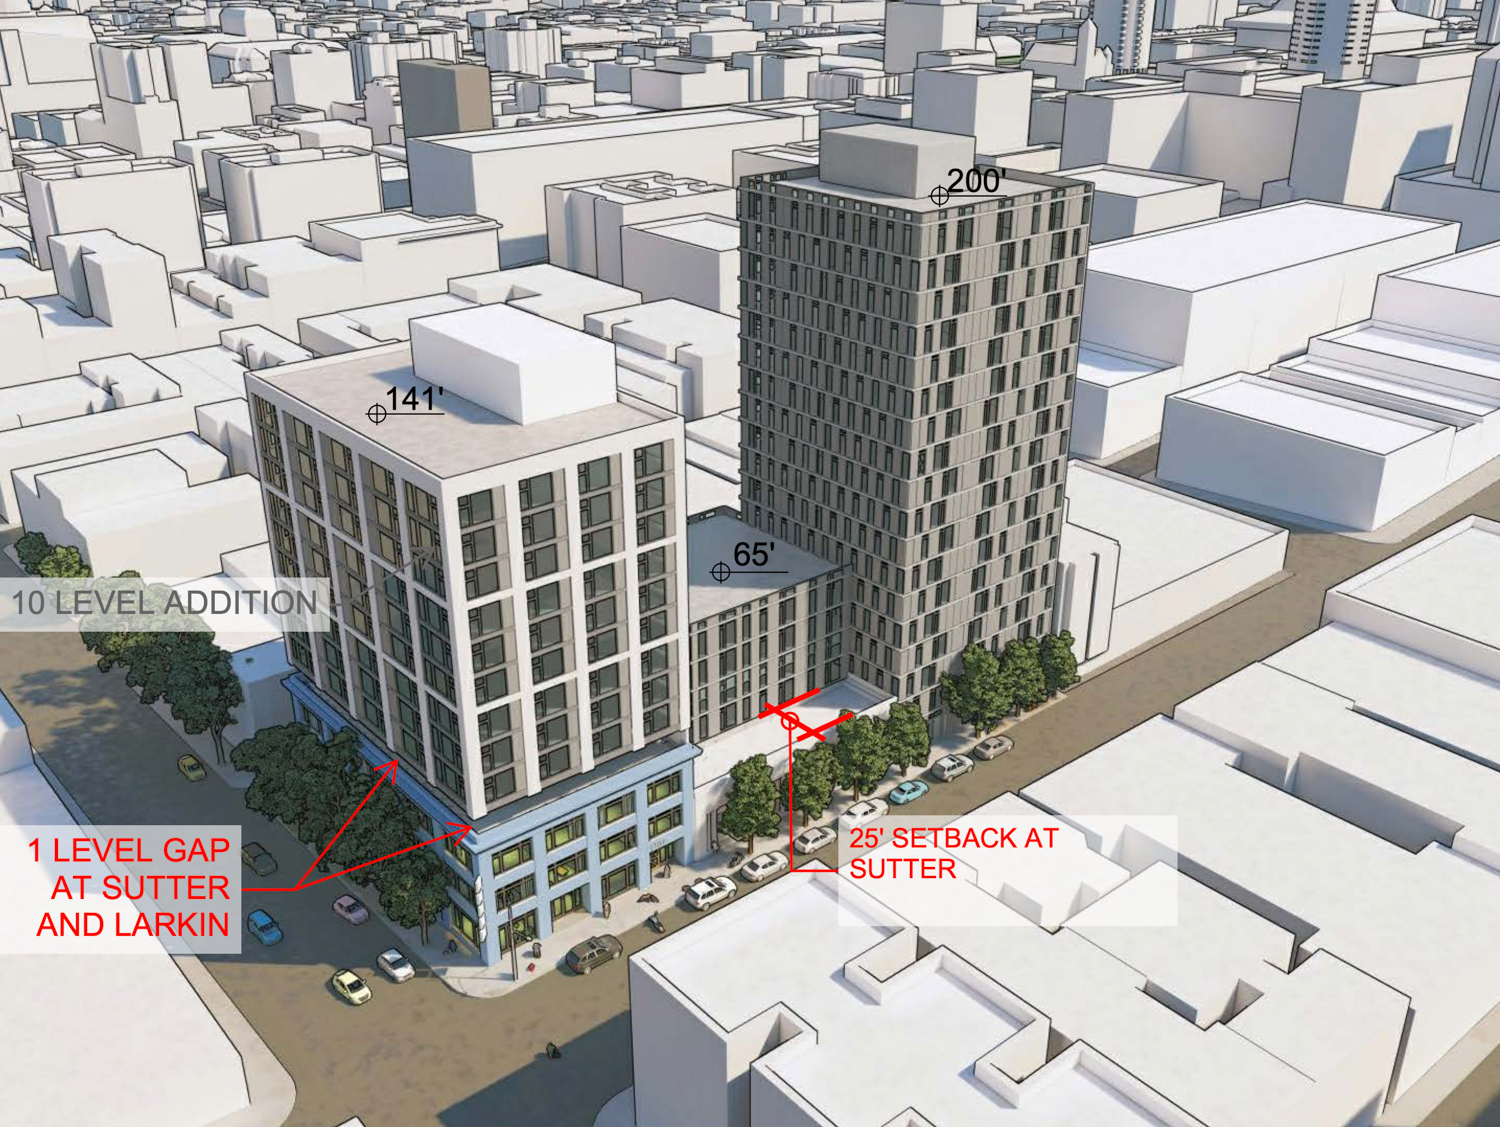 Partial preservation alternative under Scheme 2B for 1101 Sutter Street aerial view, rendering by David Baker Architects